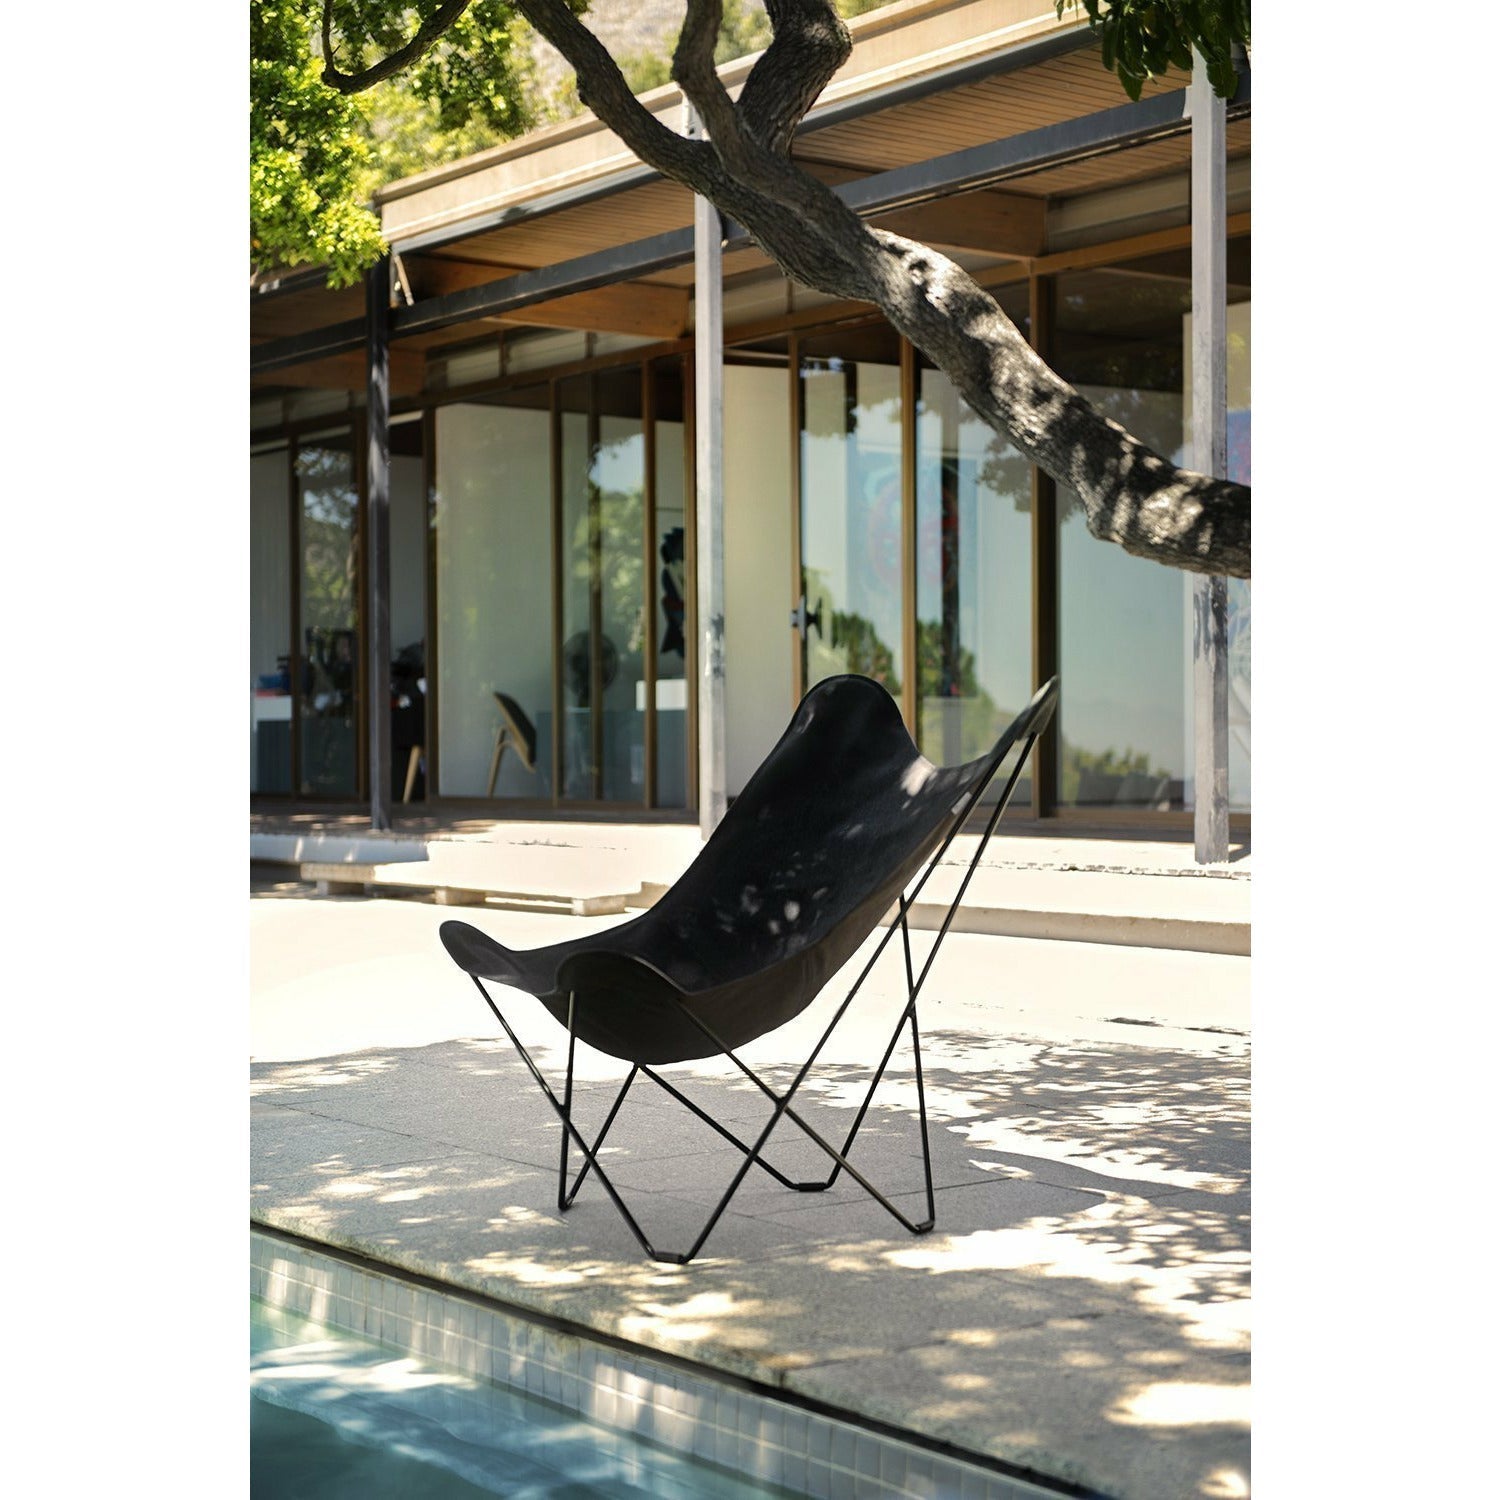 Cuero Sunshine Mariposa Butterfly Chair, Charcoal Piqué/Black Outdoor Frame